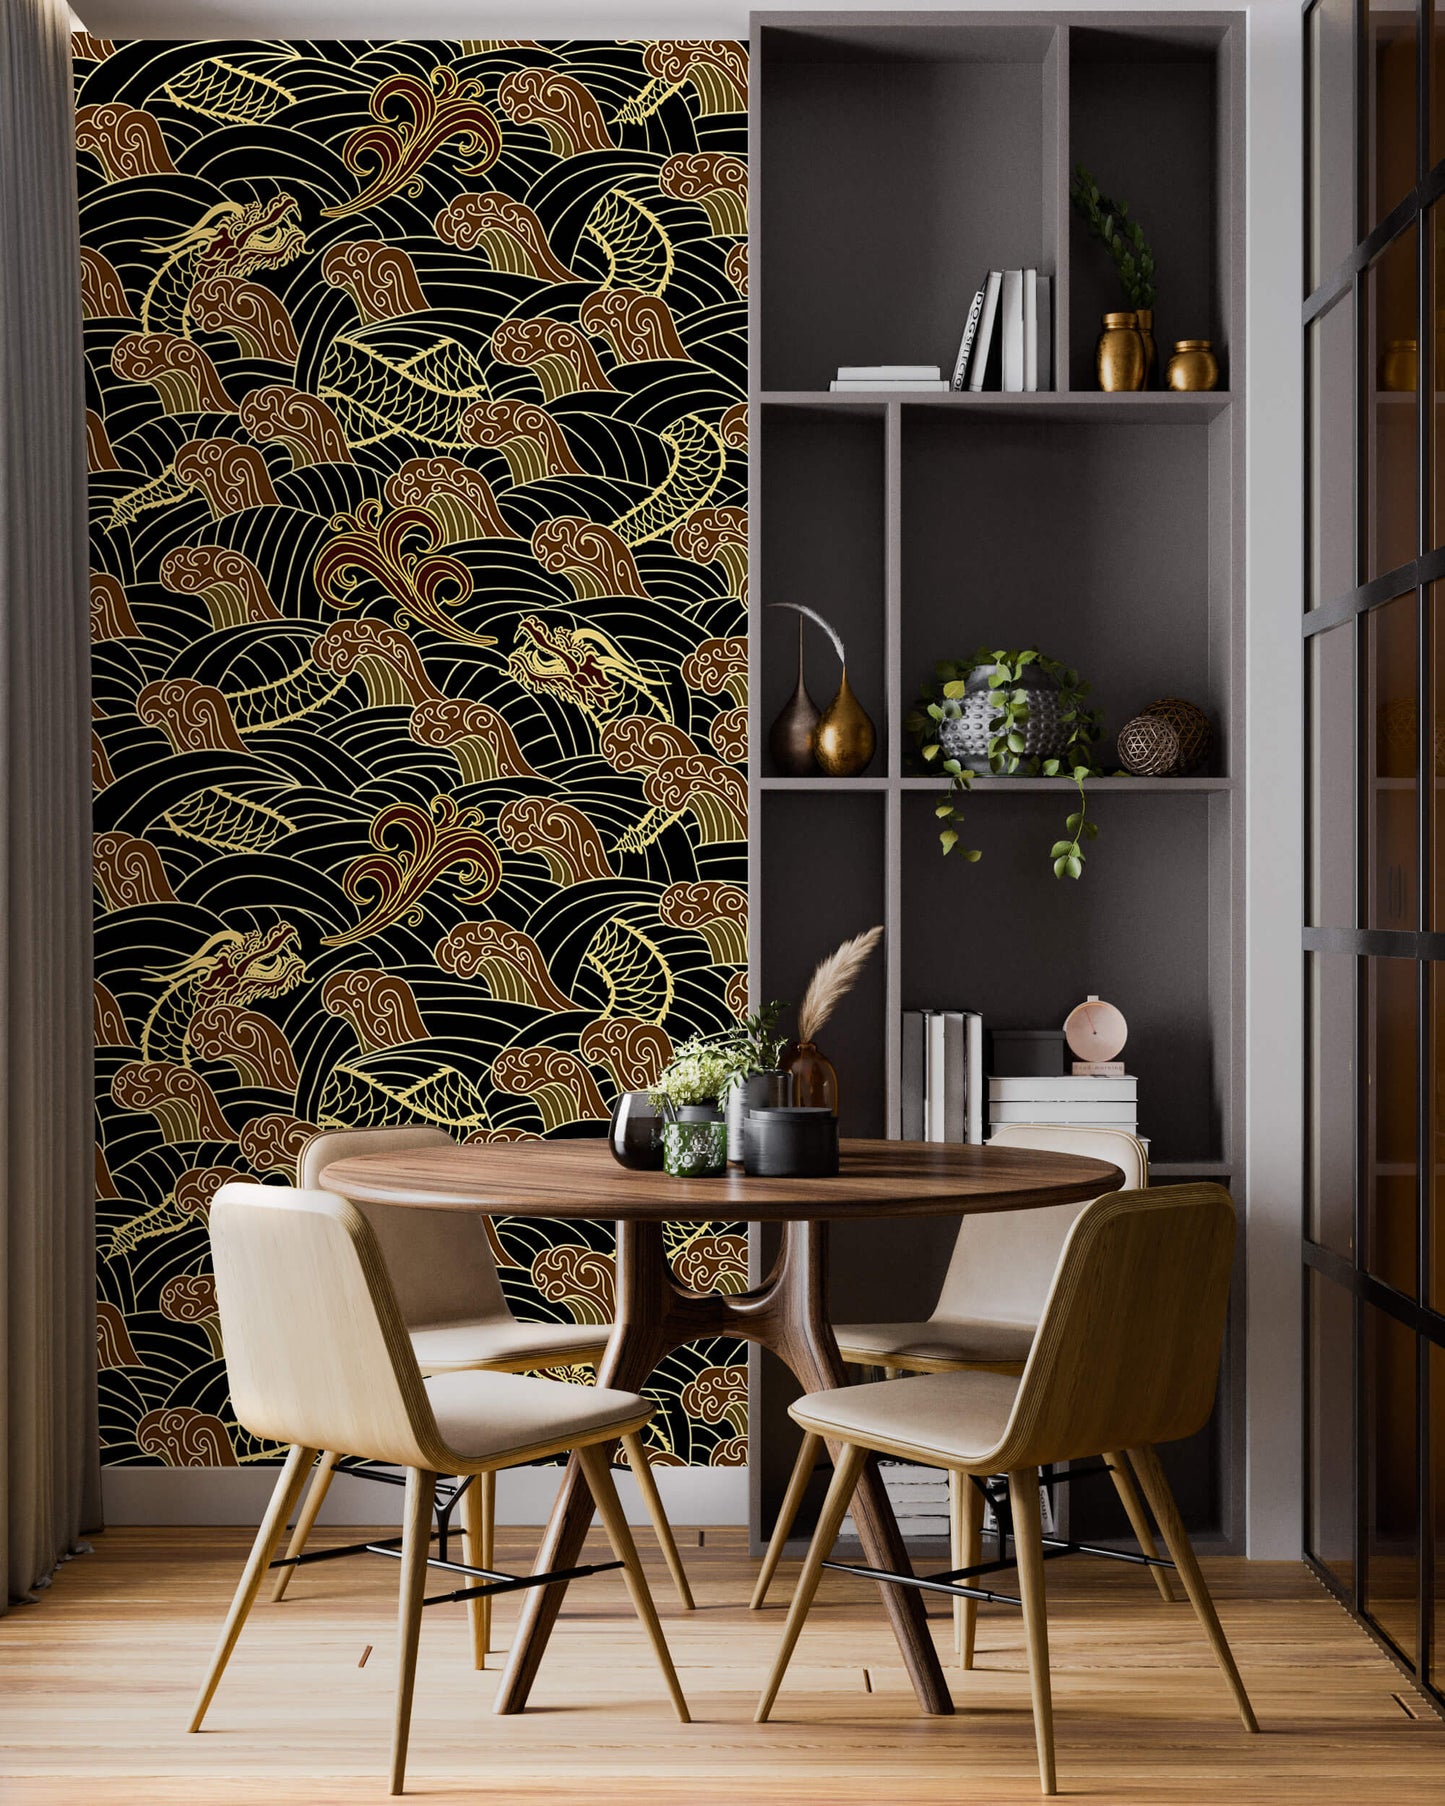 Golden Dragon Waves Wallpaper